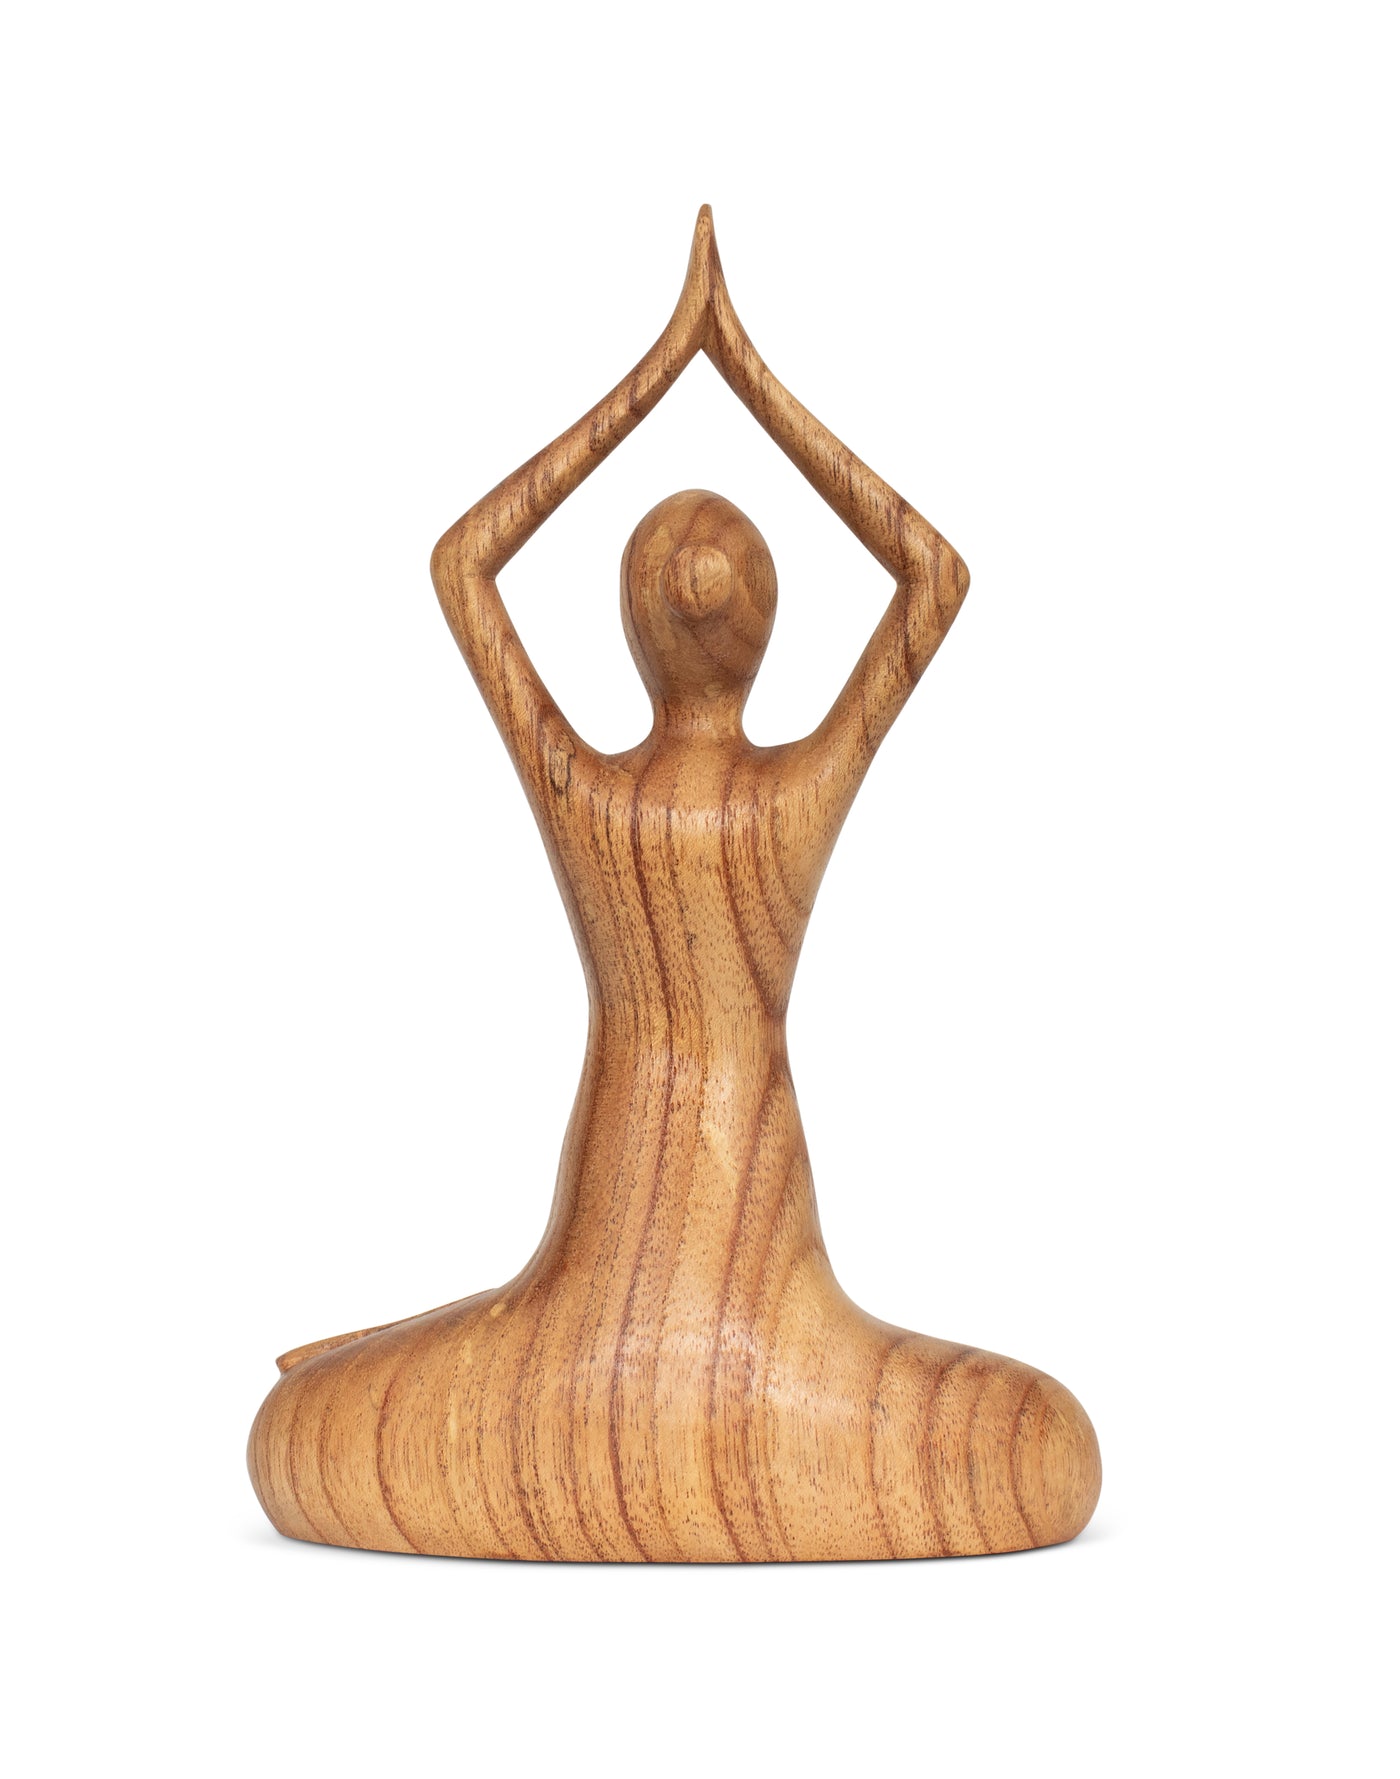 10" Wooden Handmade Mini Yoga Figurines, Yoga Pose Statue, Yoga Room Studio Decor, Mindful Home Decor Yogi Gift, Decorative Shelf Decor Objects - Easy Pose